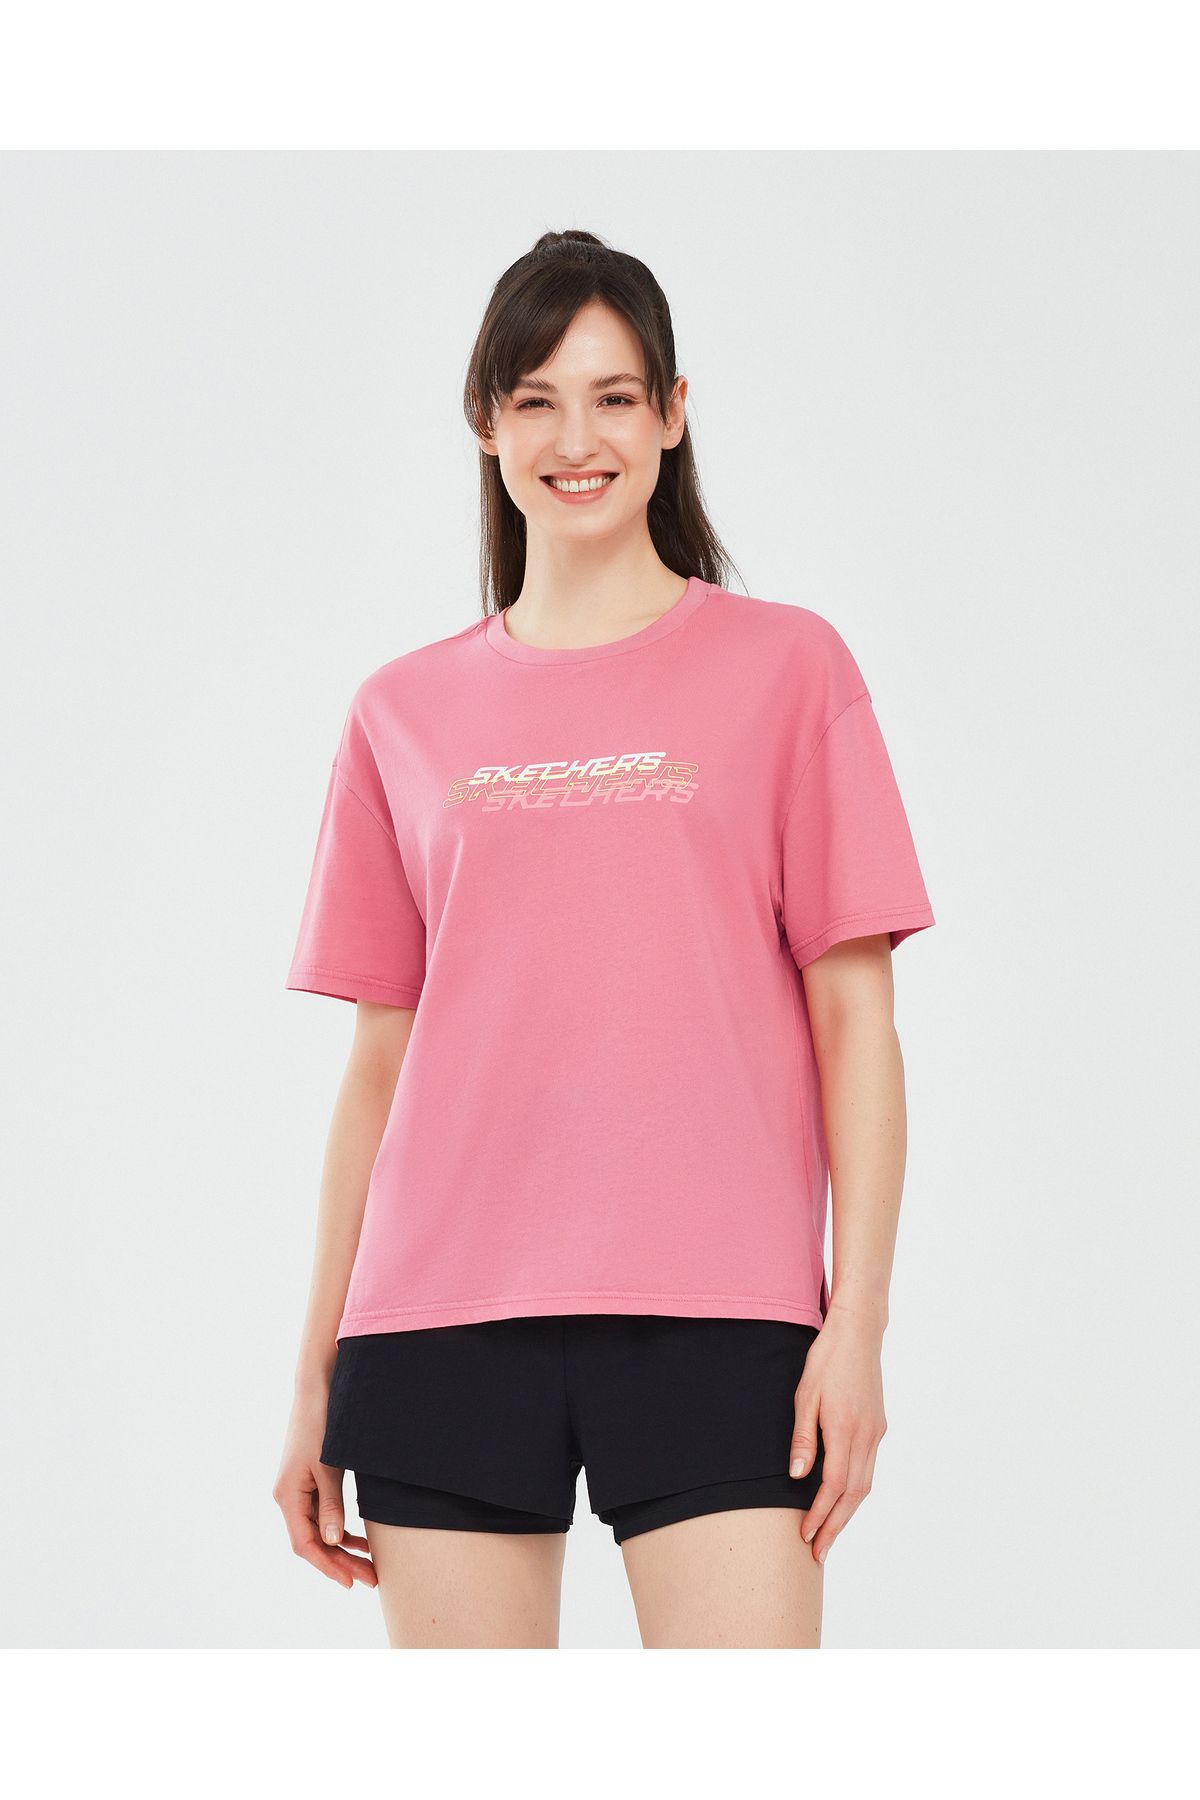 Skechers Graphic T-Shirt W Short Sleeve Kadın Açık Pembe Tshirt S241199-590